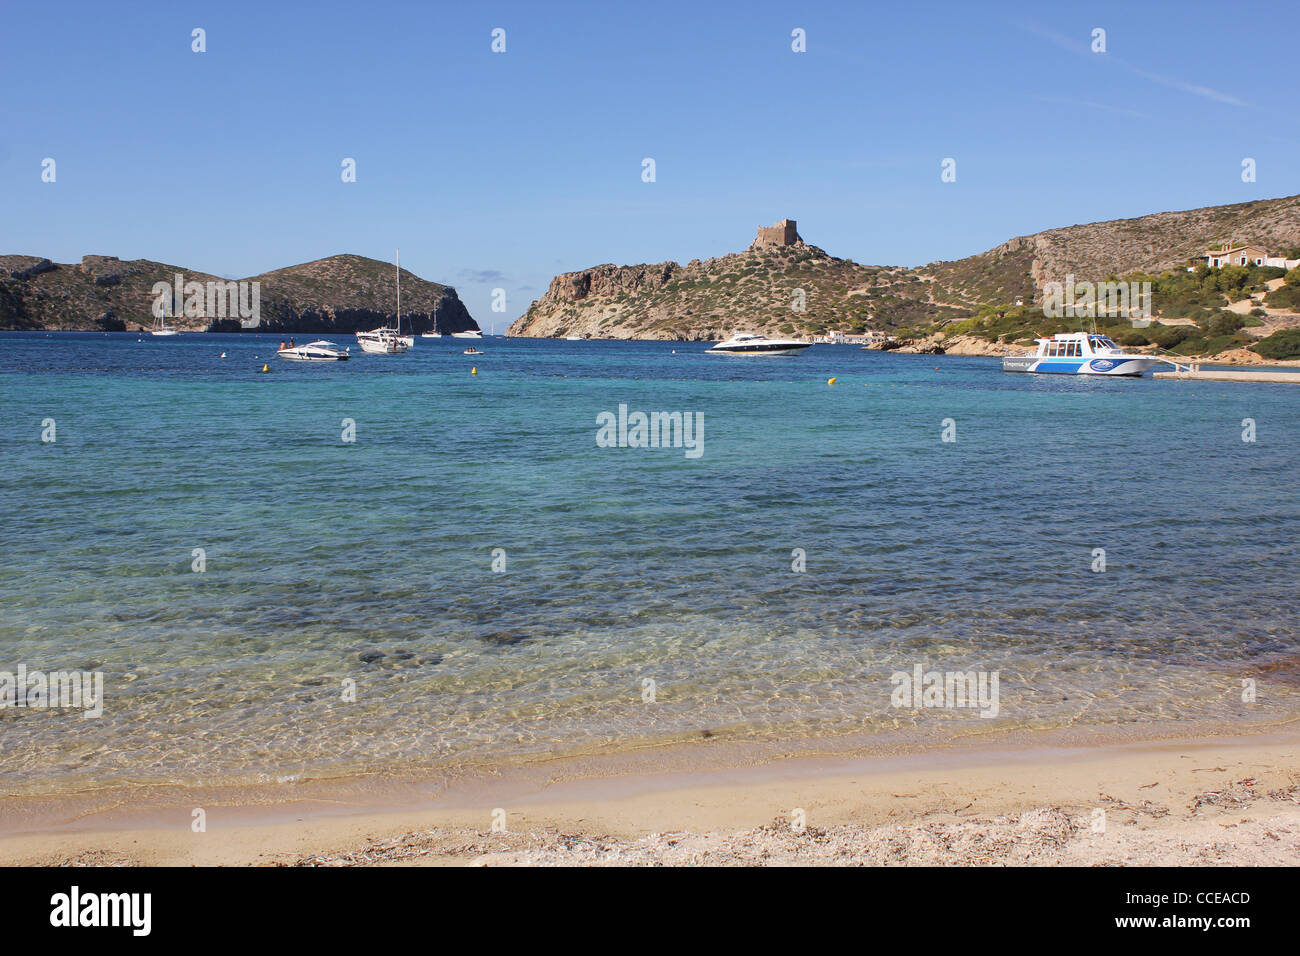 Scene on Cabrera Island, Cabrera Archipelago of islands, Spanish Natural Park, located South East of Palma de Mallorca / Majorca Stock Photo